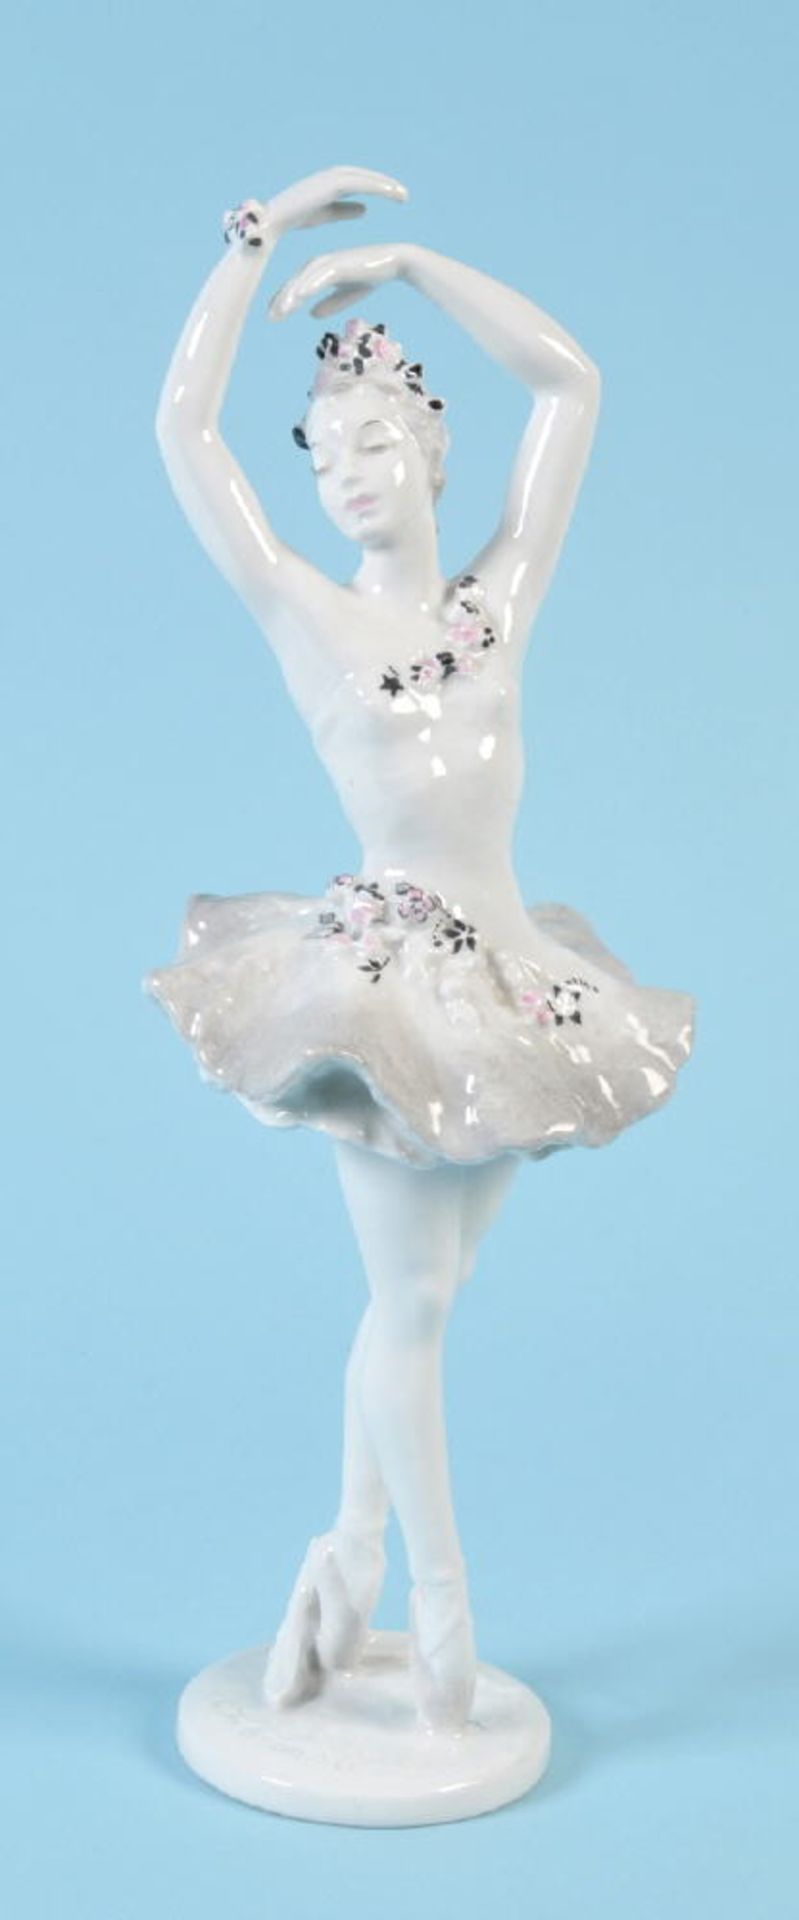 Figur - Ballerina "Rosenthal"Porzellan, teilw. farbig gefasst, auf rundem Sockel, H= 30 cm,